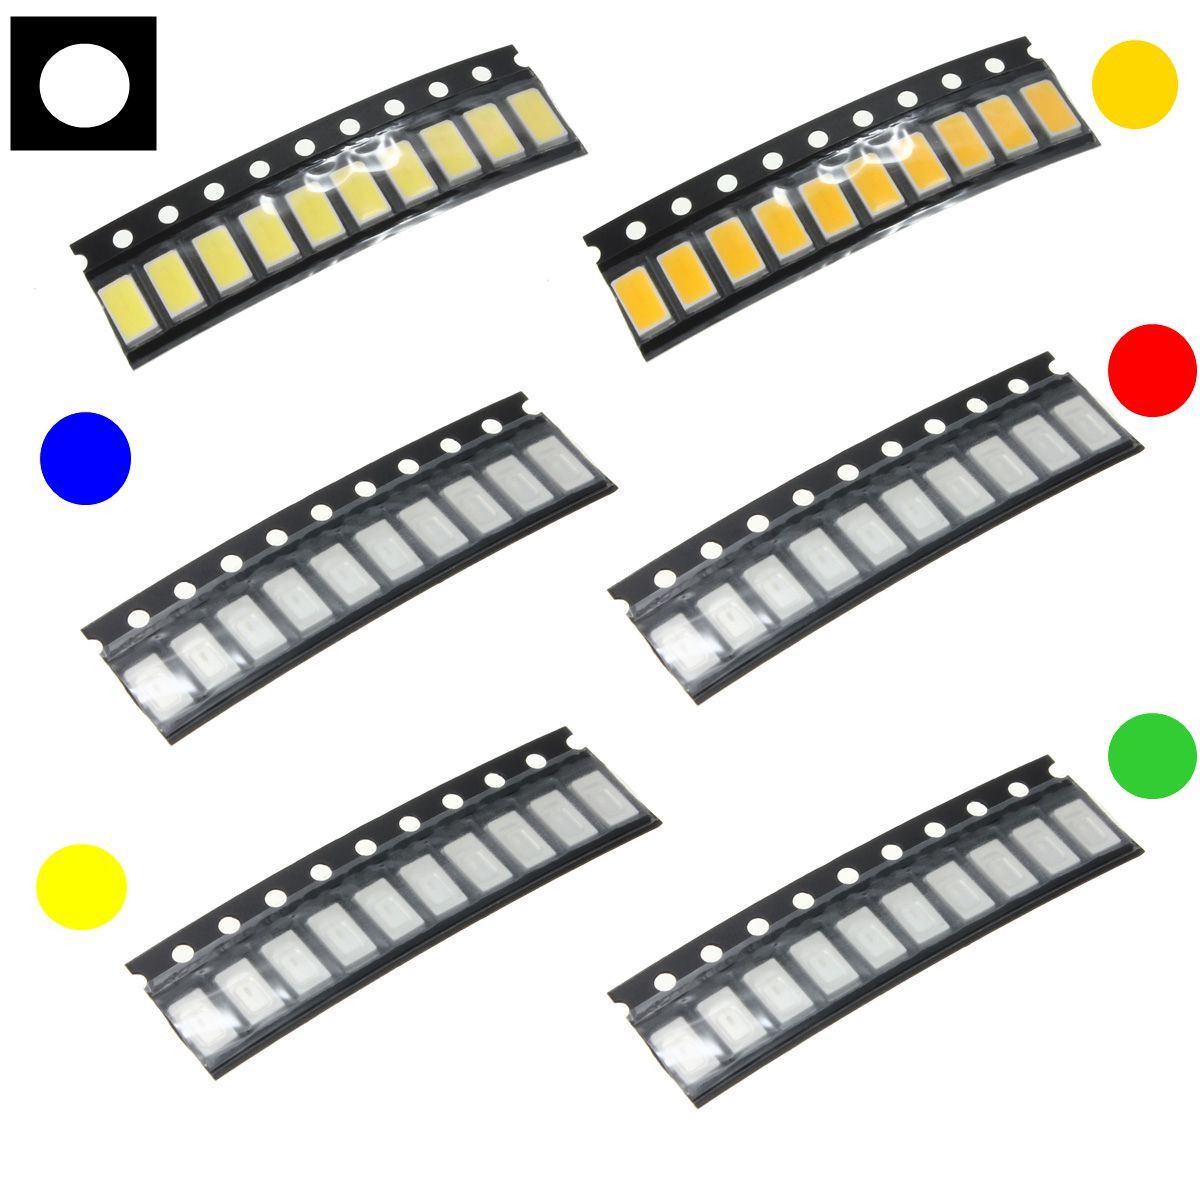 10-pcs-1206-Colorful-SMD-SMT-LED-Light-Lamp-Beads-For-Strip-Lights-979306